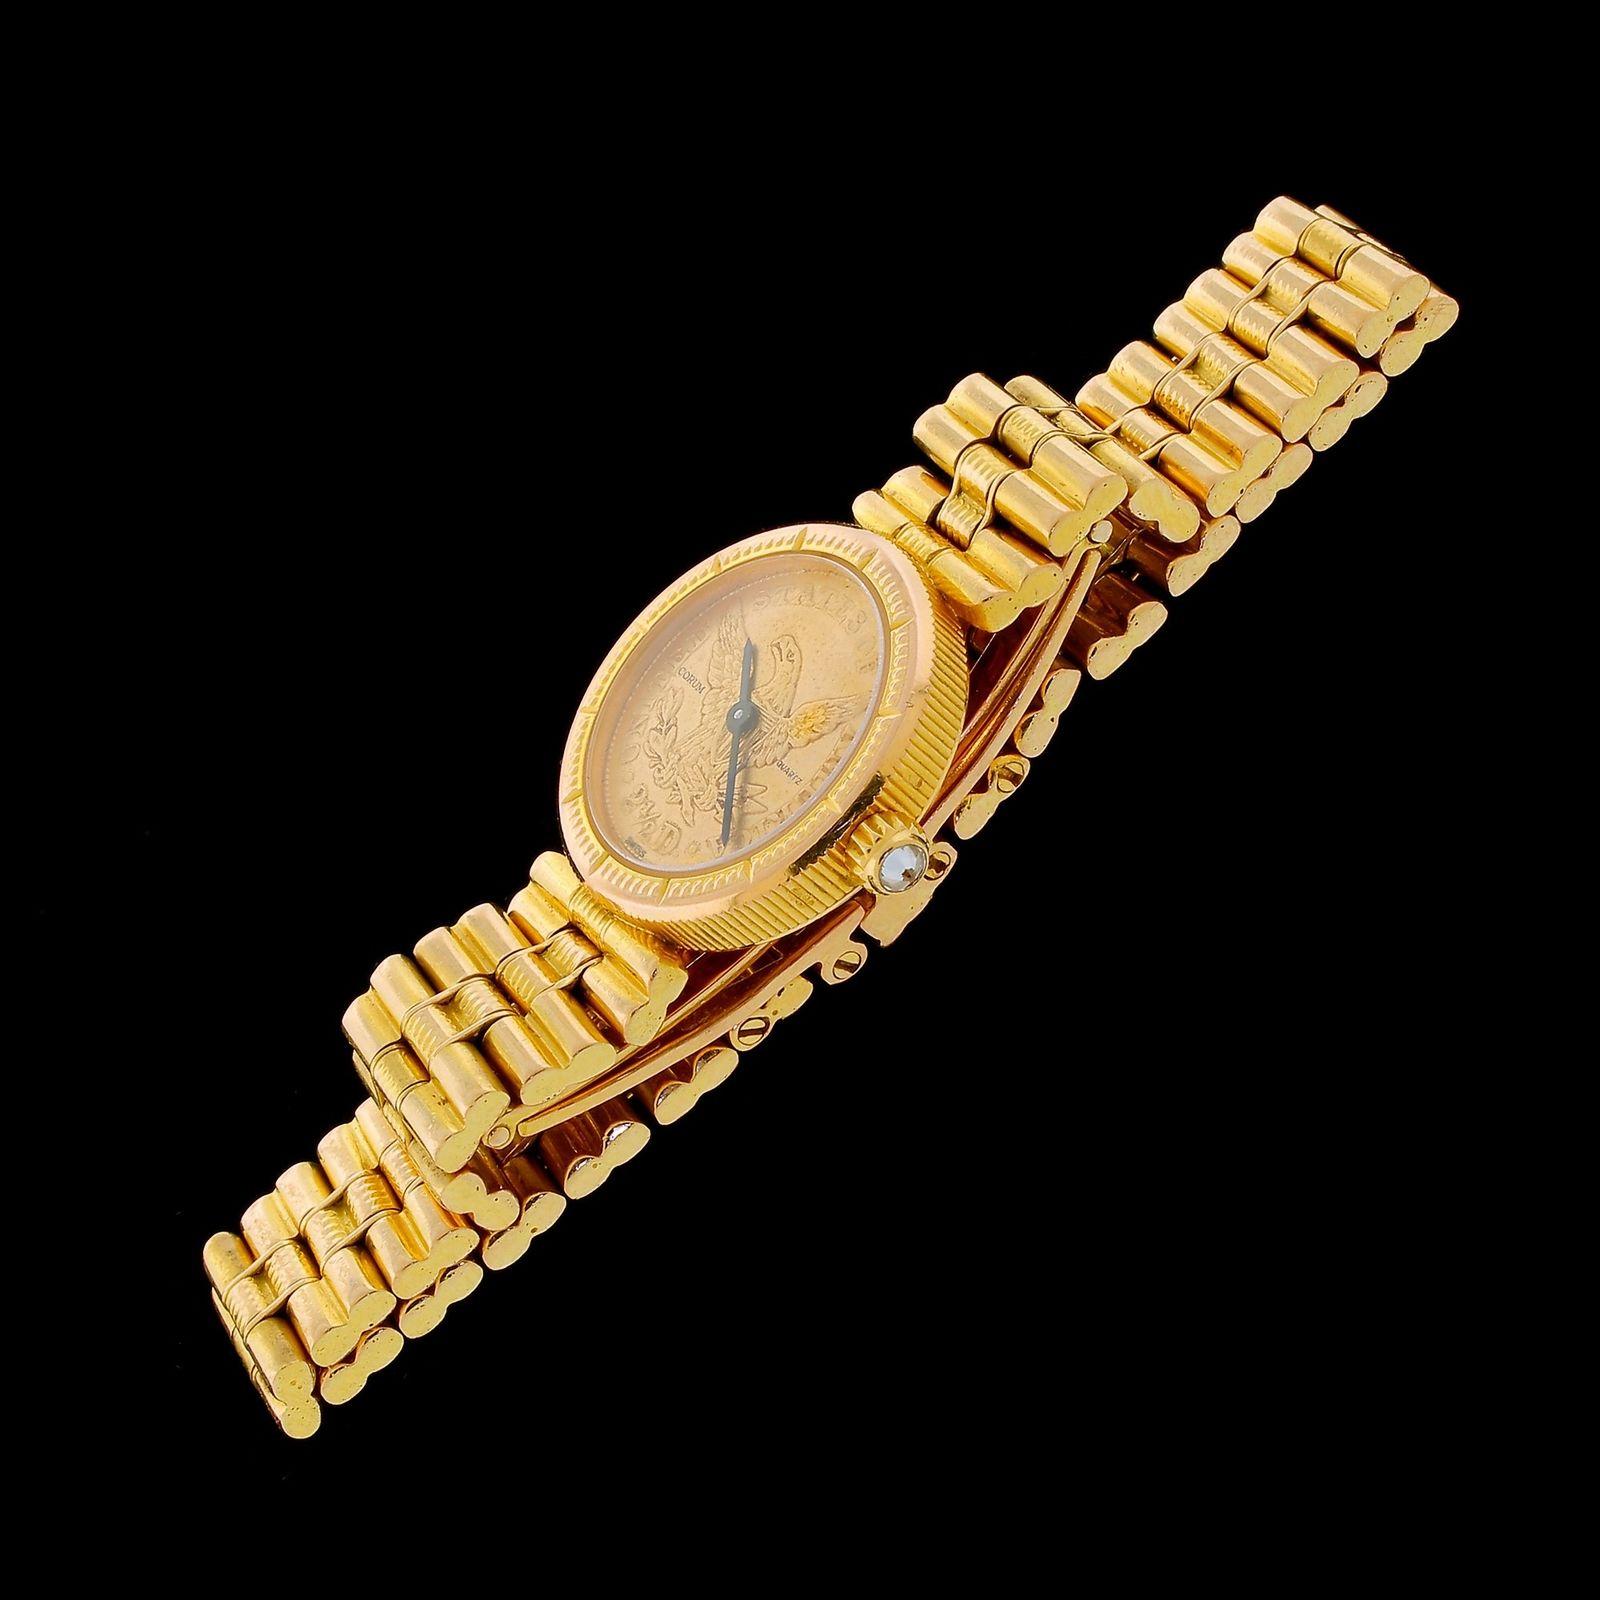 corum gold watch